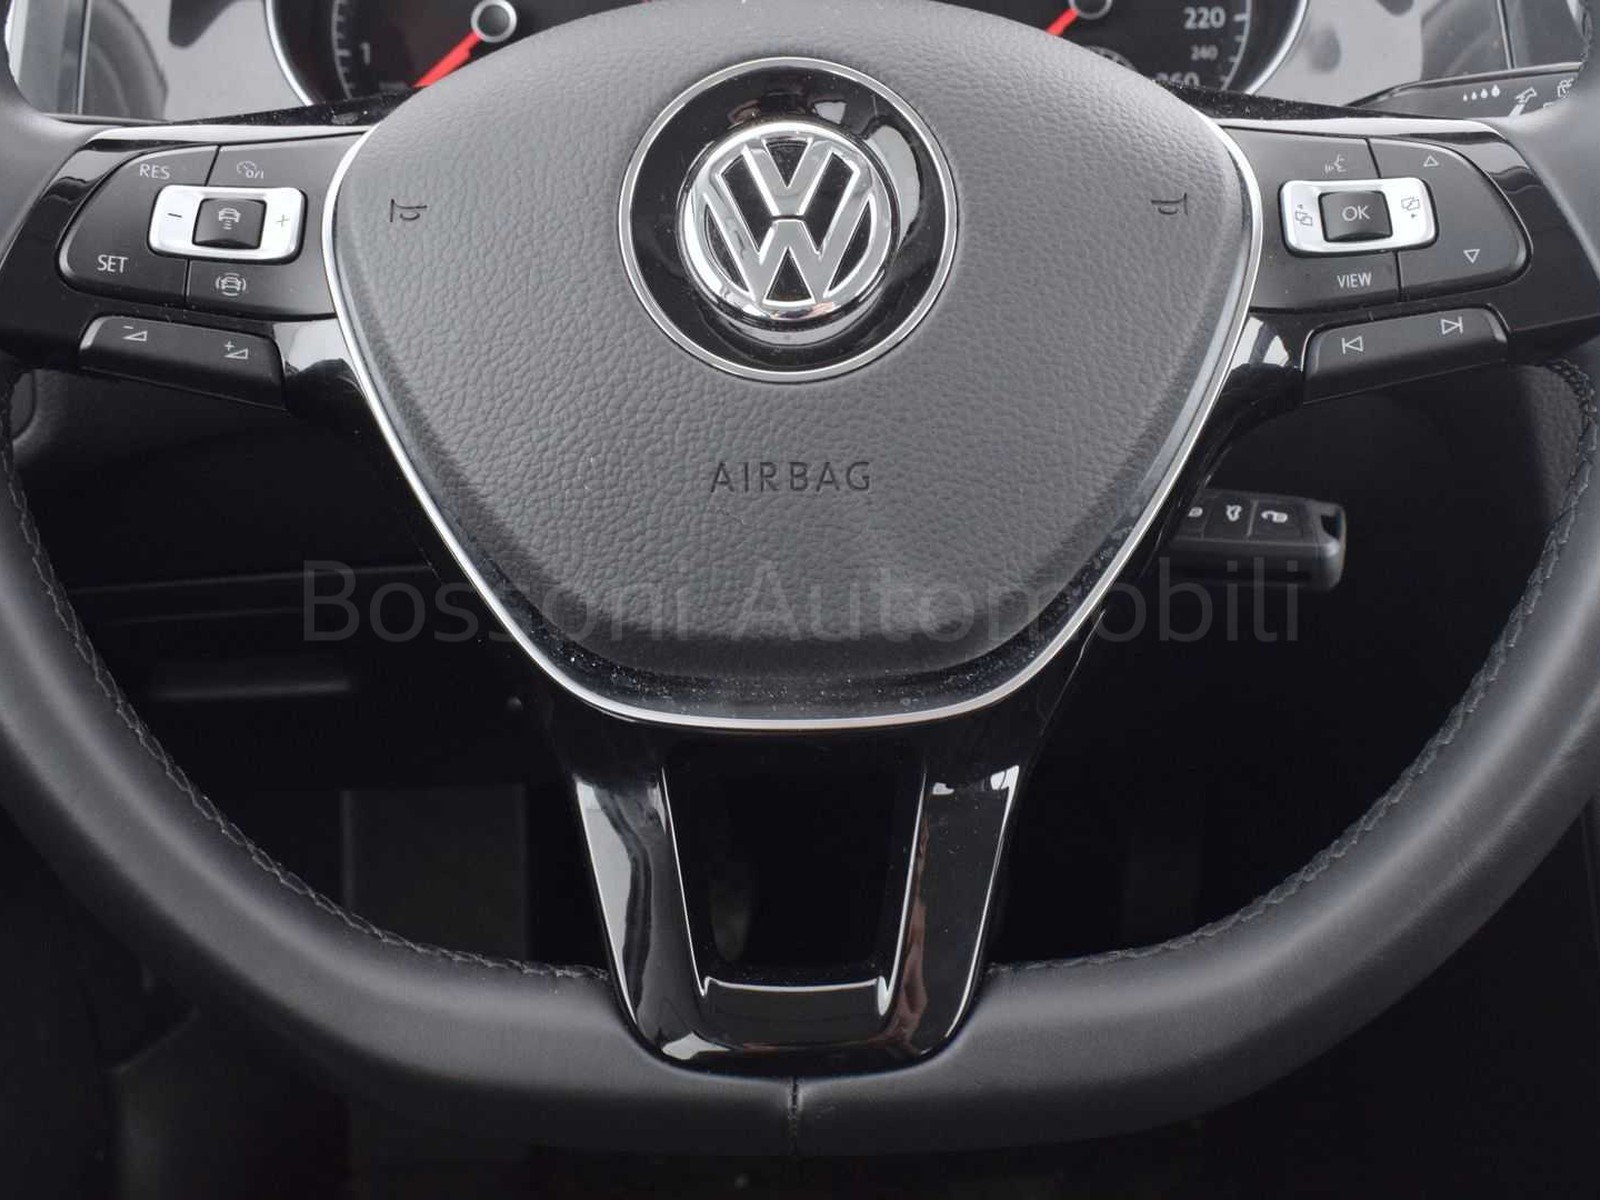 16 - Volkswagen Golf 5 porte 1.0 tsi bluemotion 115cv business